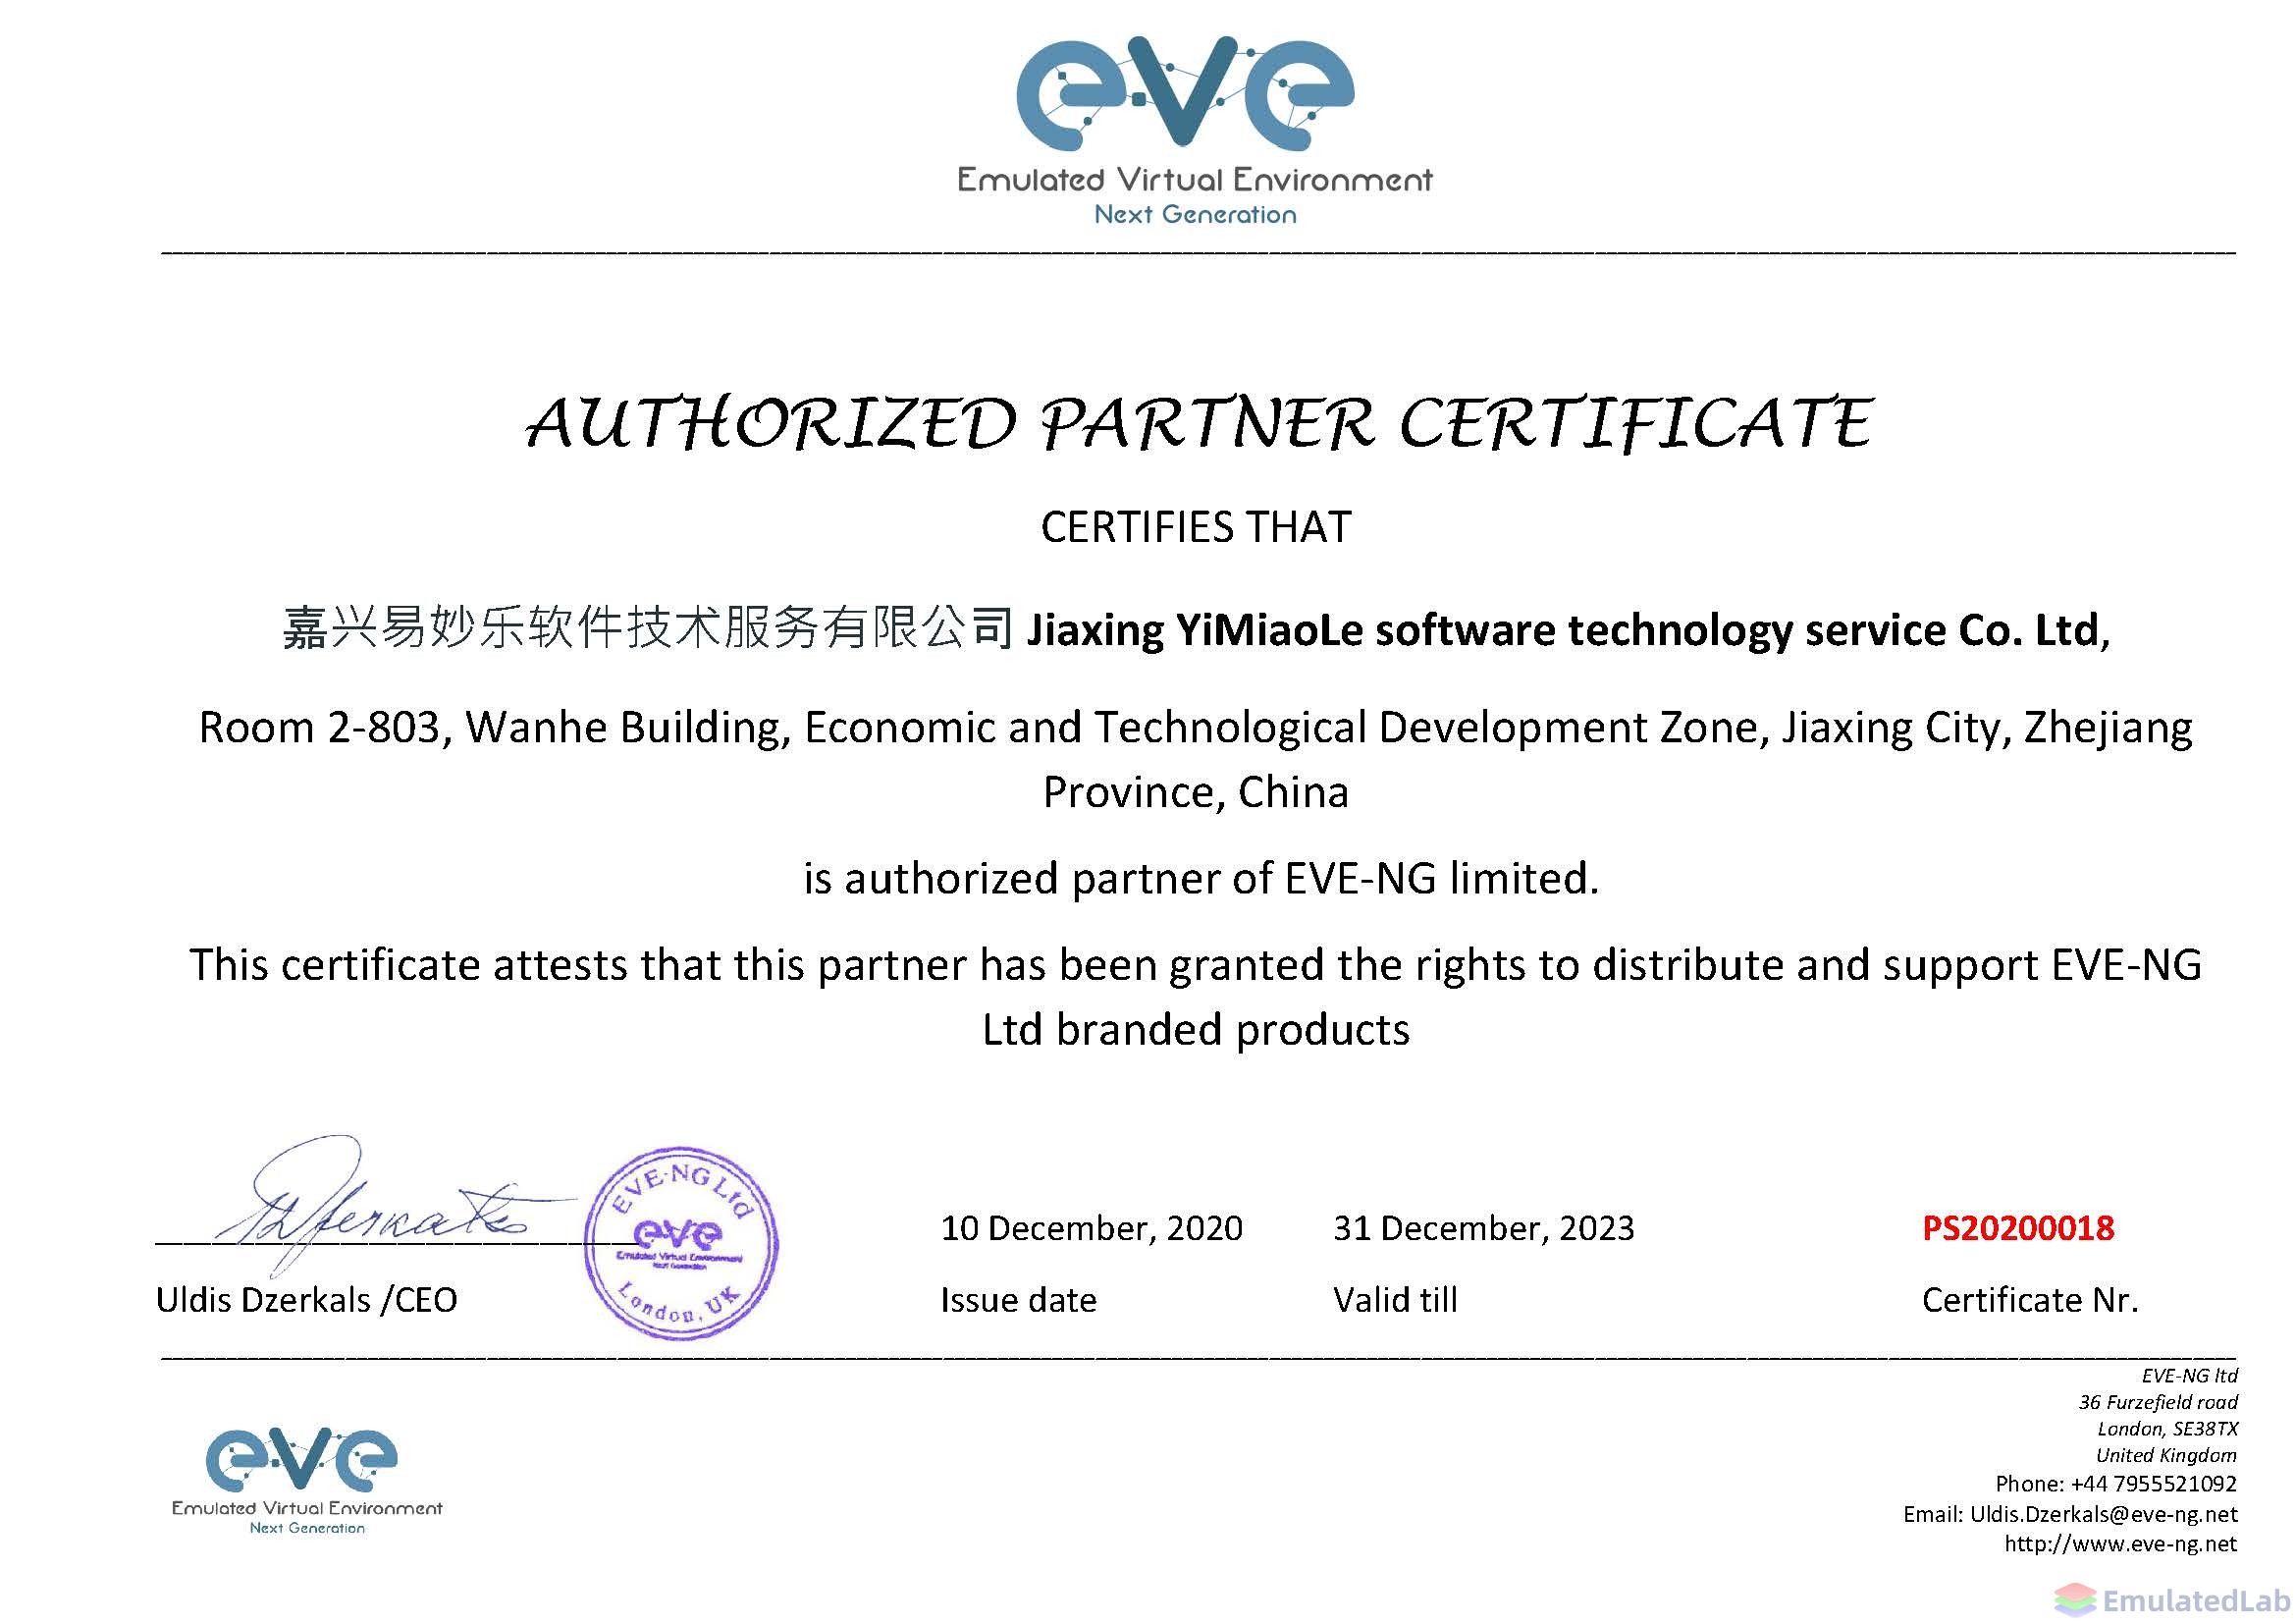 Distributor certificate China2022-23.jpg